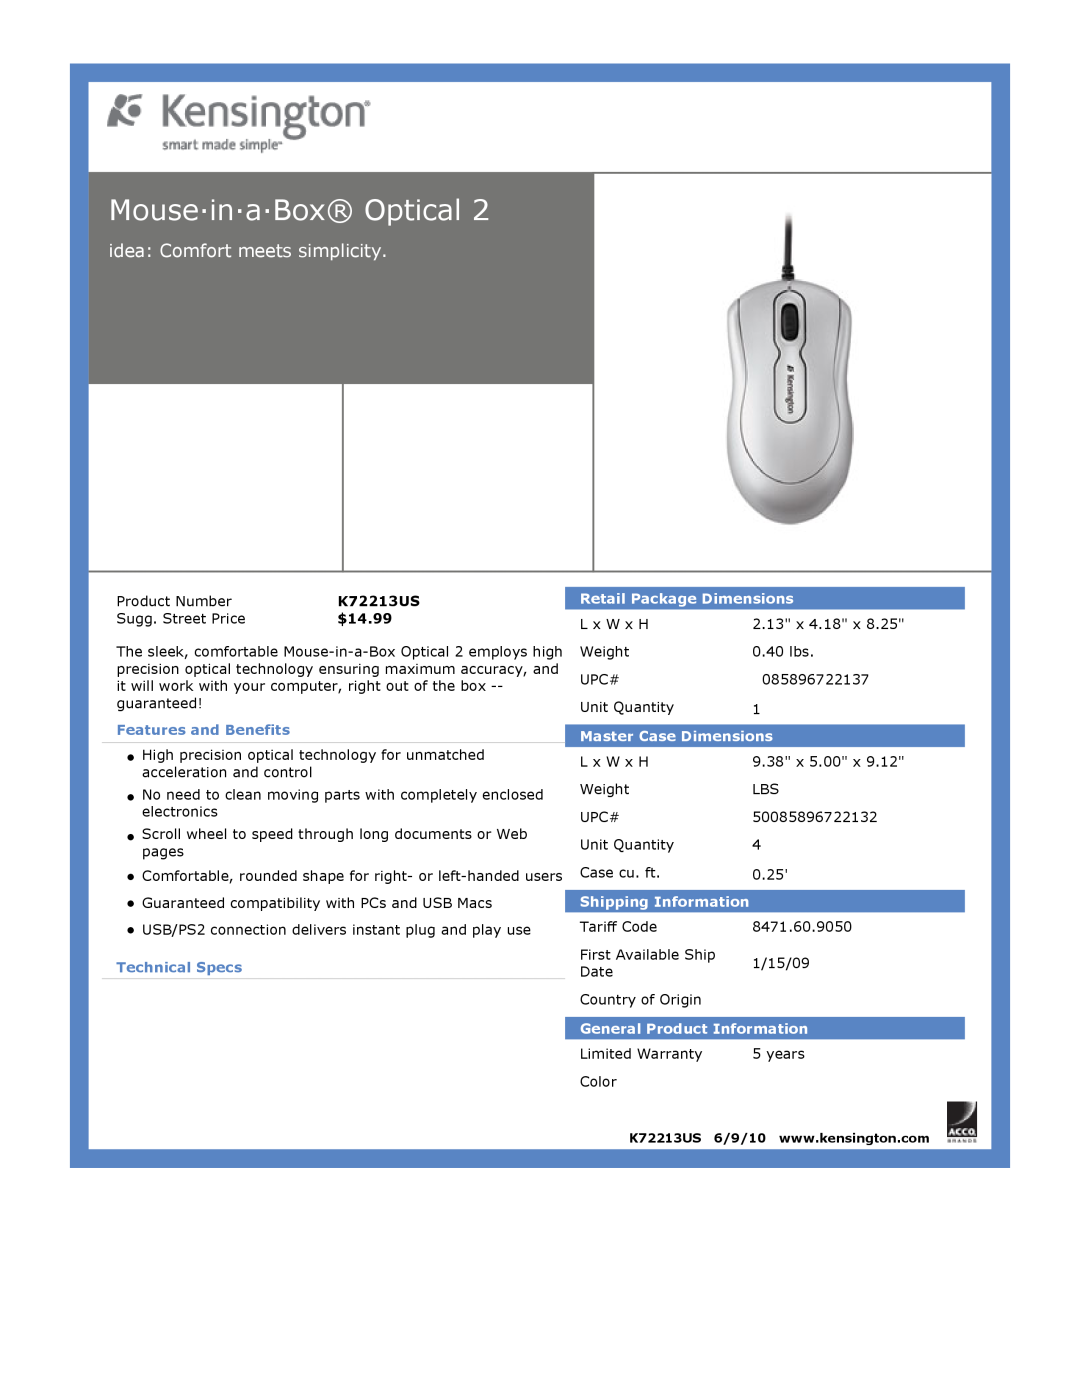 Kensington EU64325 Mouse·in·a·Box Optical, idea: Comfort meets simplicity, $14.99, Features and Benefits, Technical Specs 